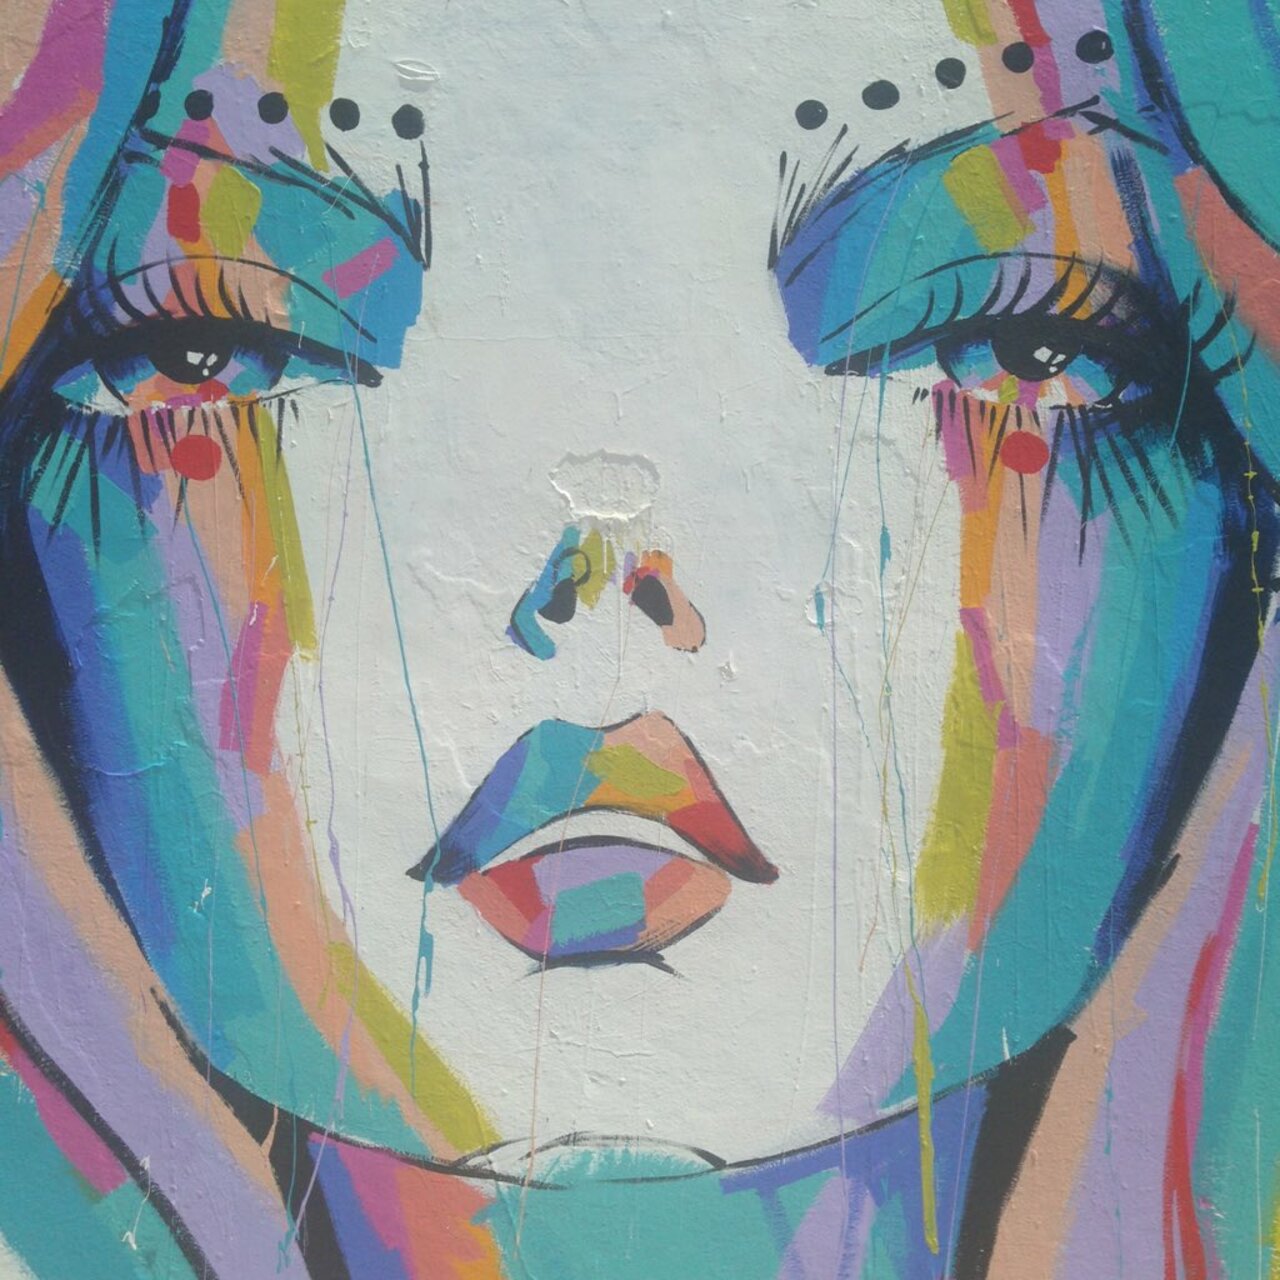 She's a #Bondi #beauty!  #art #graffiti #colourful #eyes #fashion #makeup https://t.co/tFQK42v30s